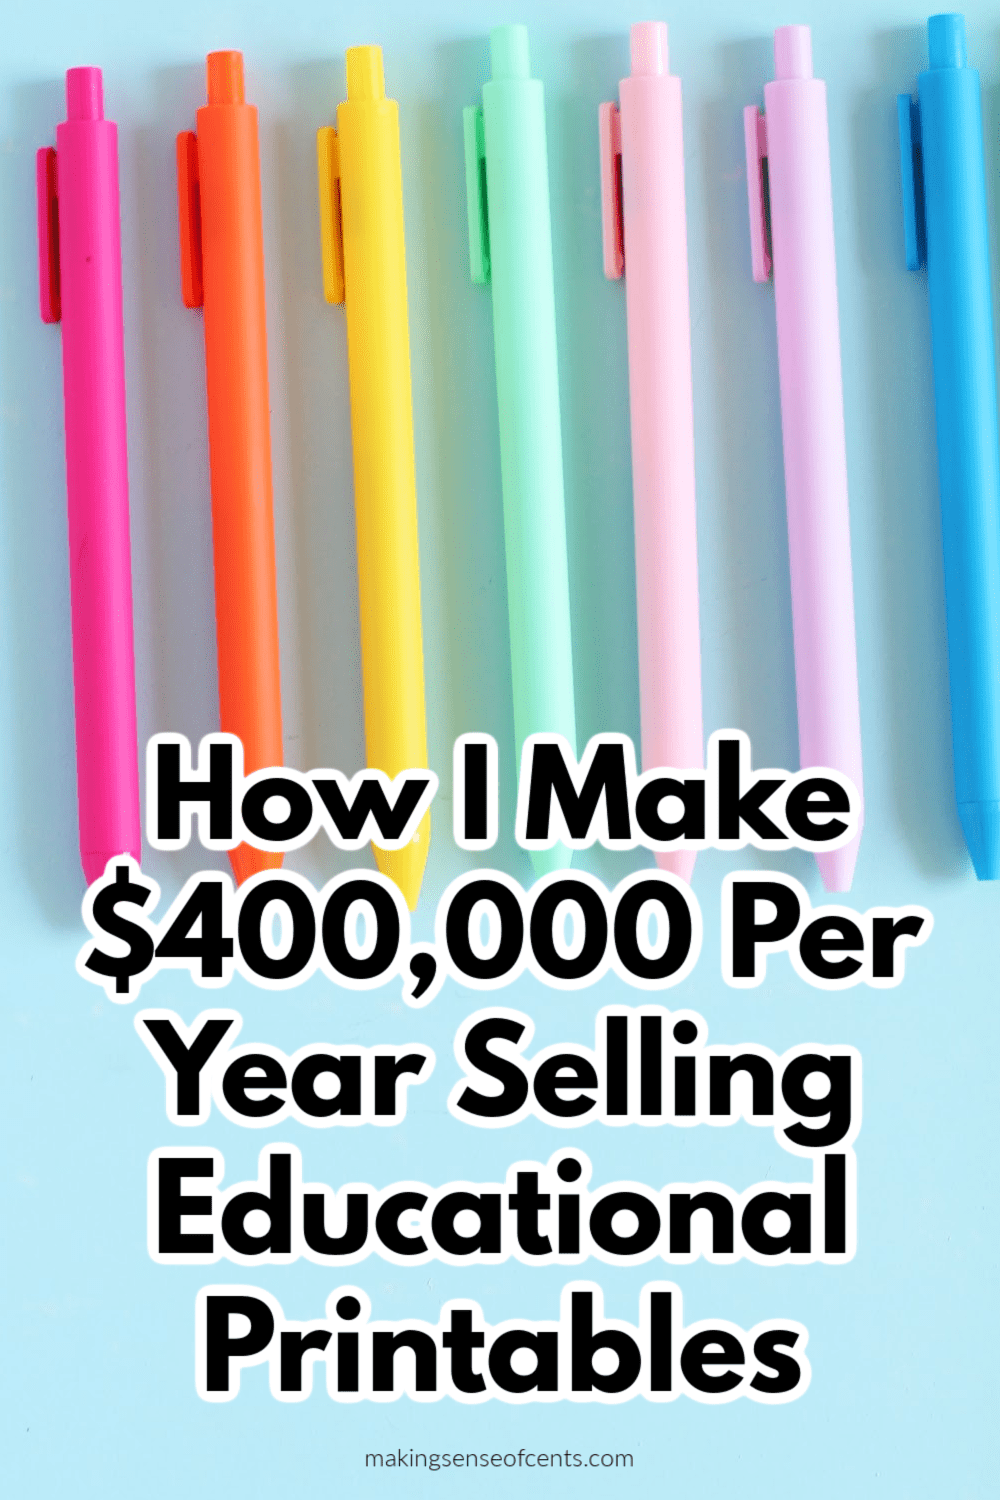 How I Make $400,000 Per Year Selling Educational Printables